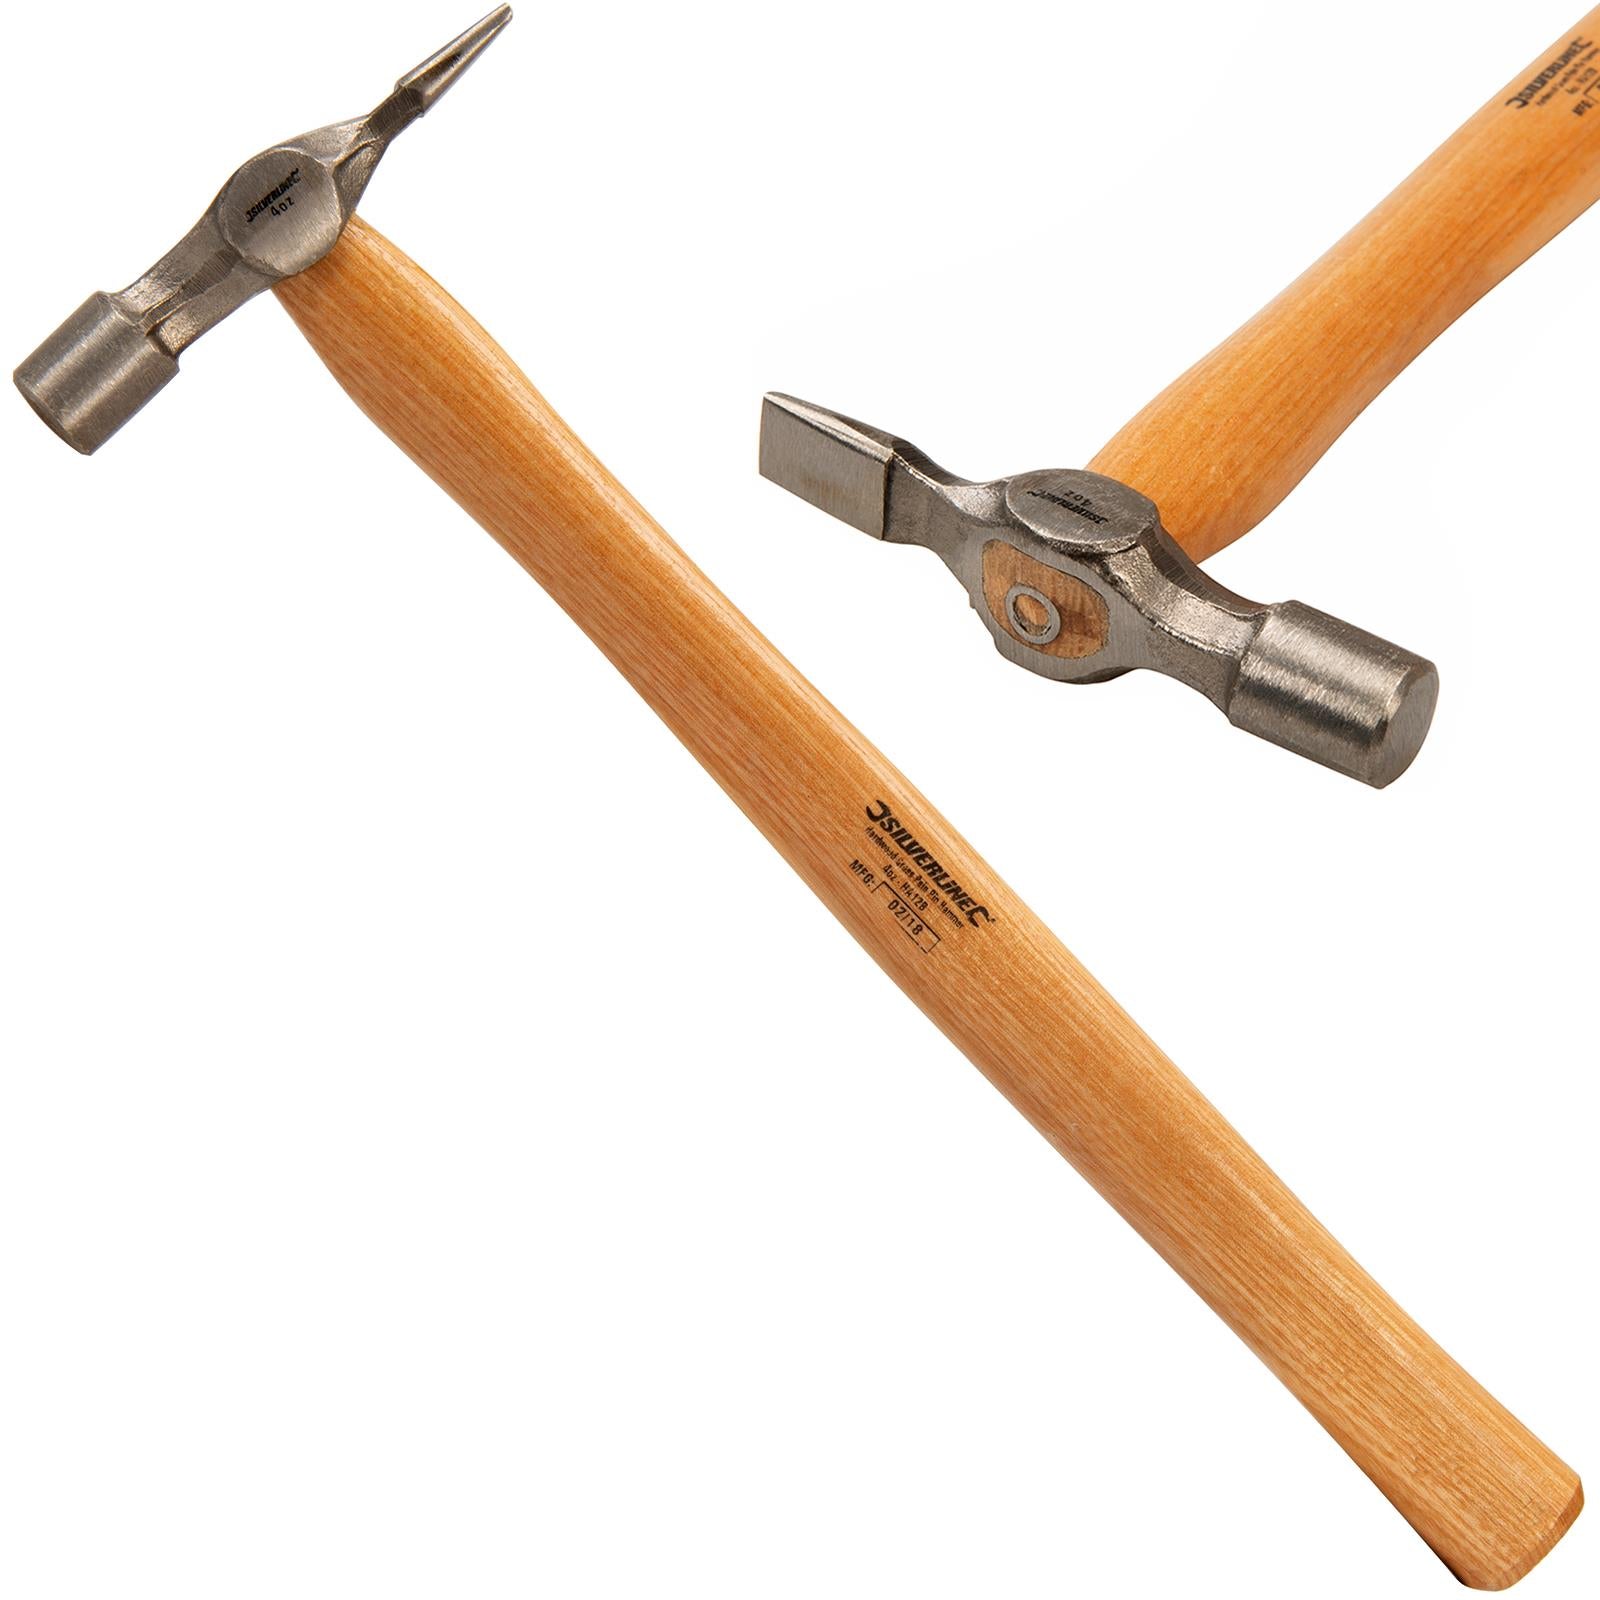 Silverline Hardwood Cross Pein Pin Hammer 4oz Nail Tack Wooden Forged Steel